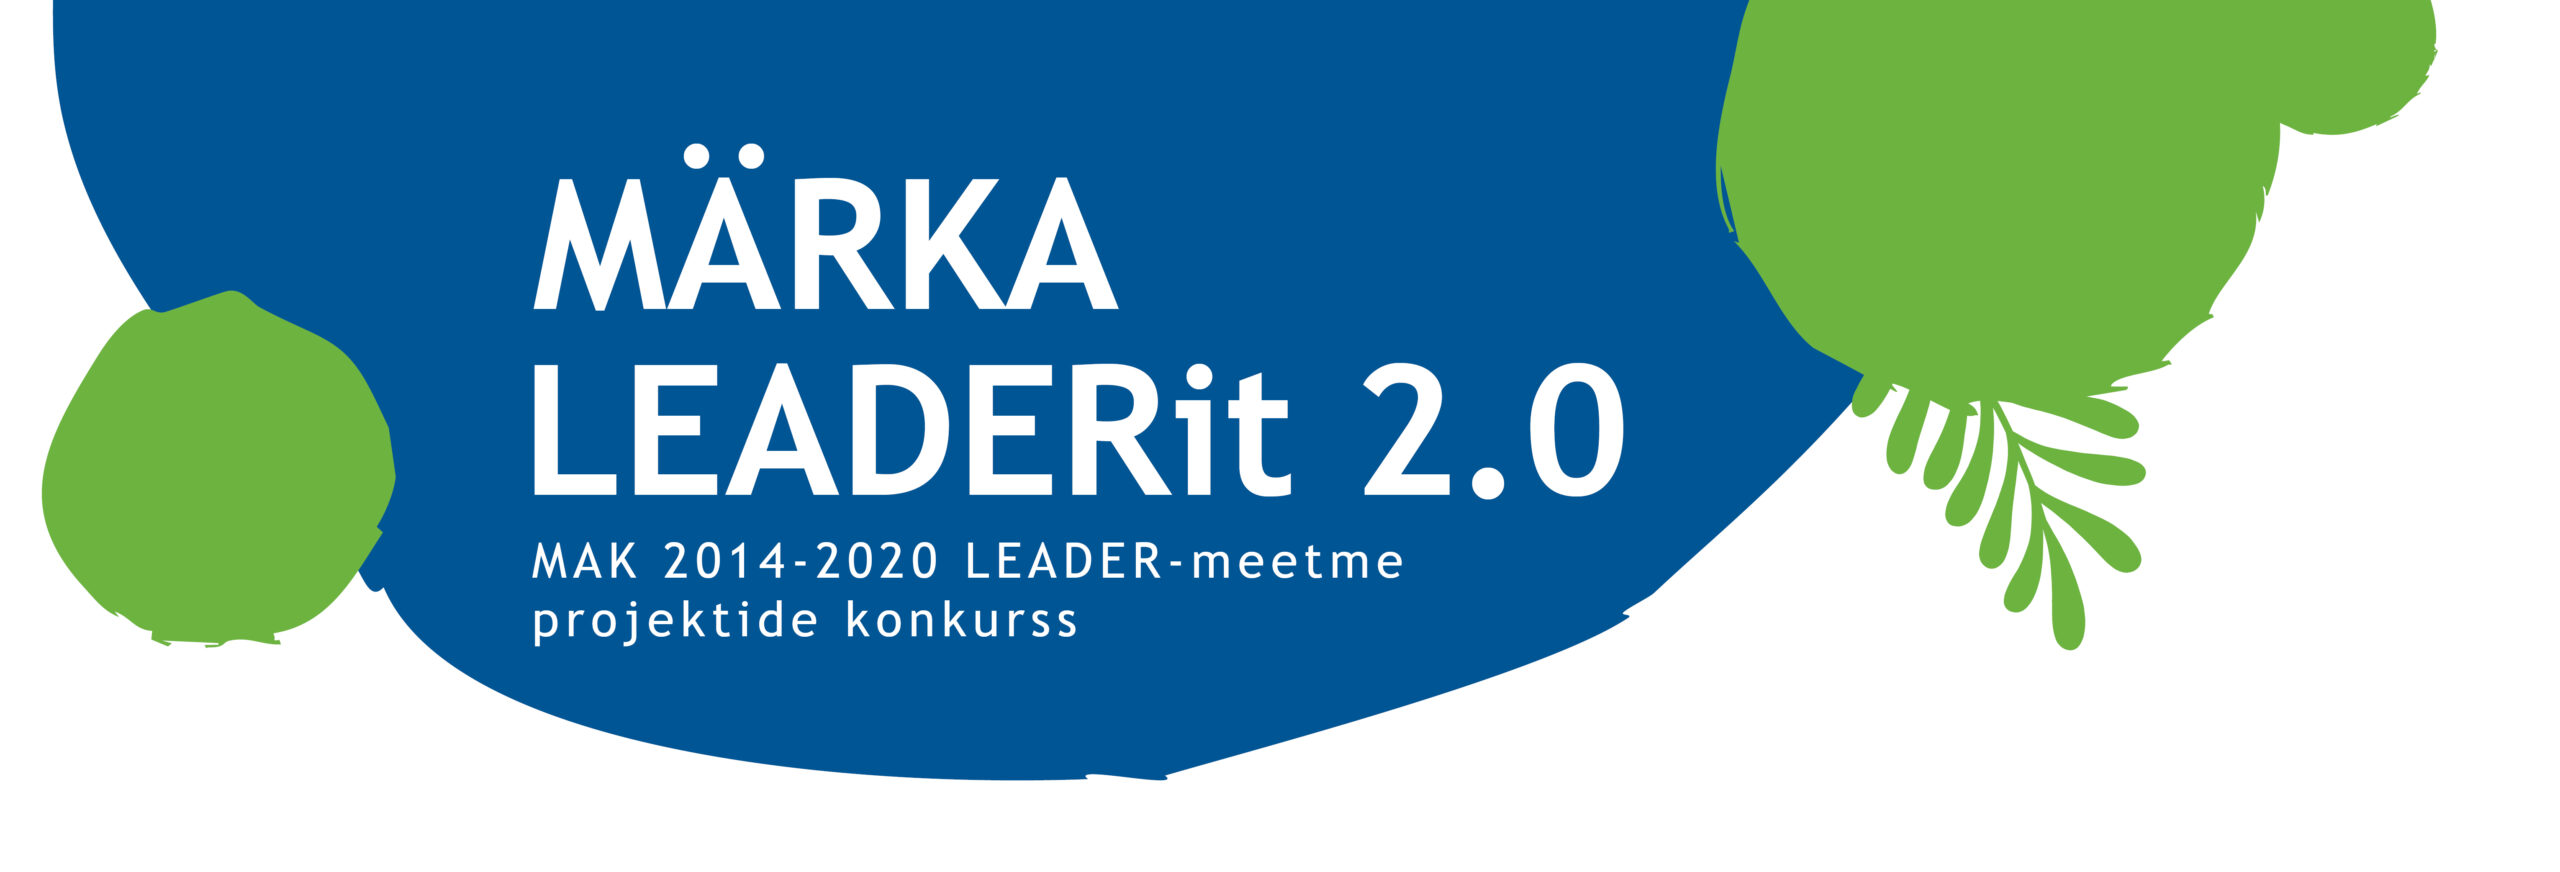 Konkurss MÄRKA LEADERit 2.0